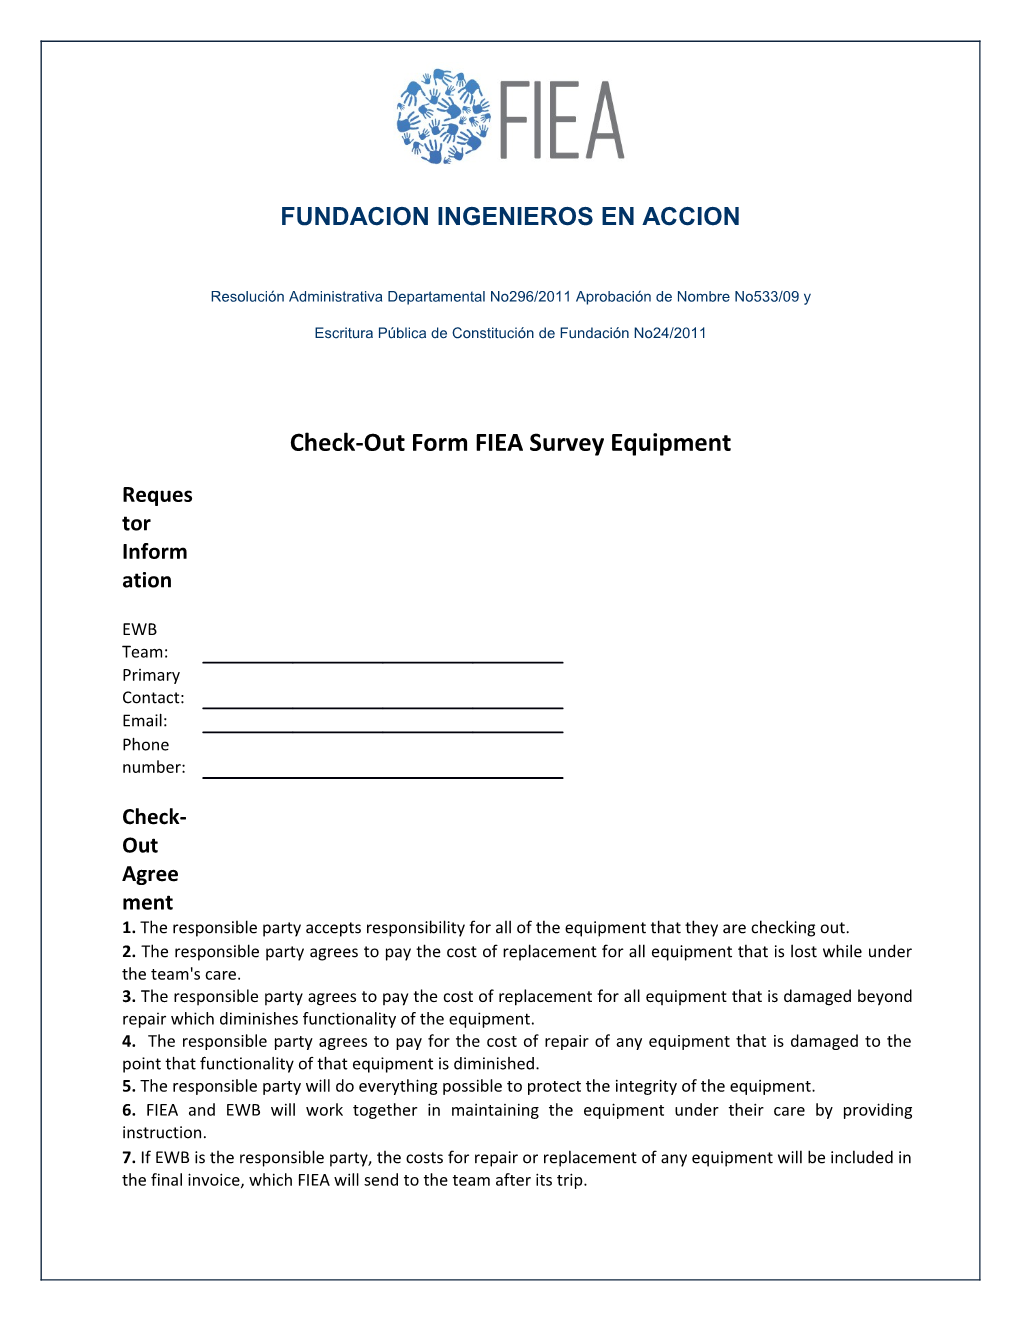 Check-Out Form FIEA Survey Equipment